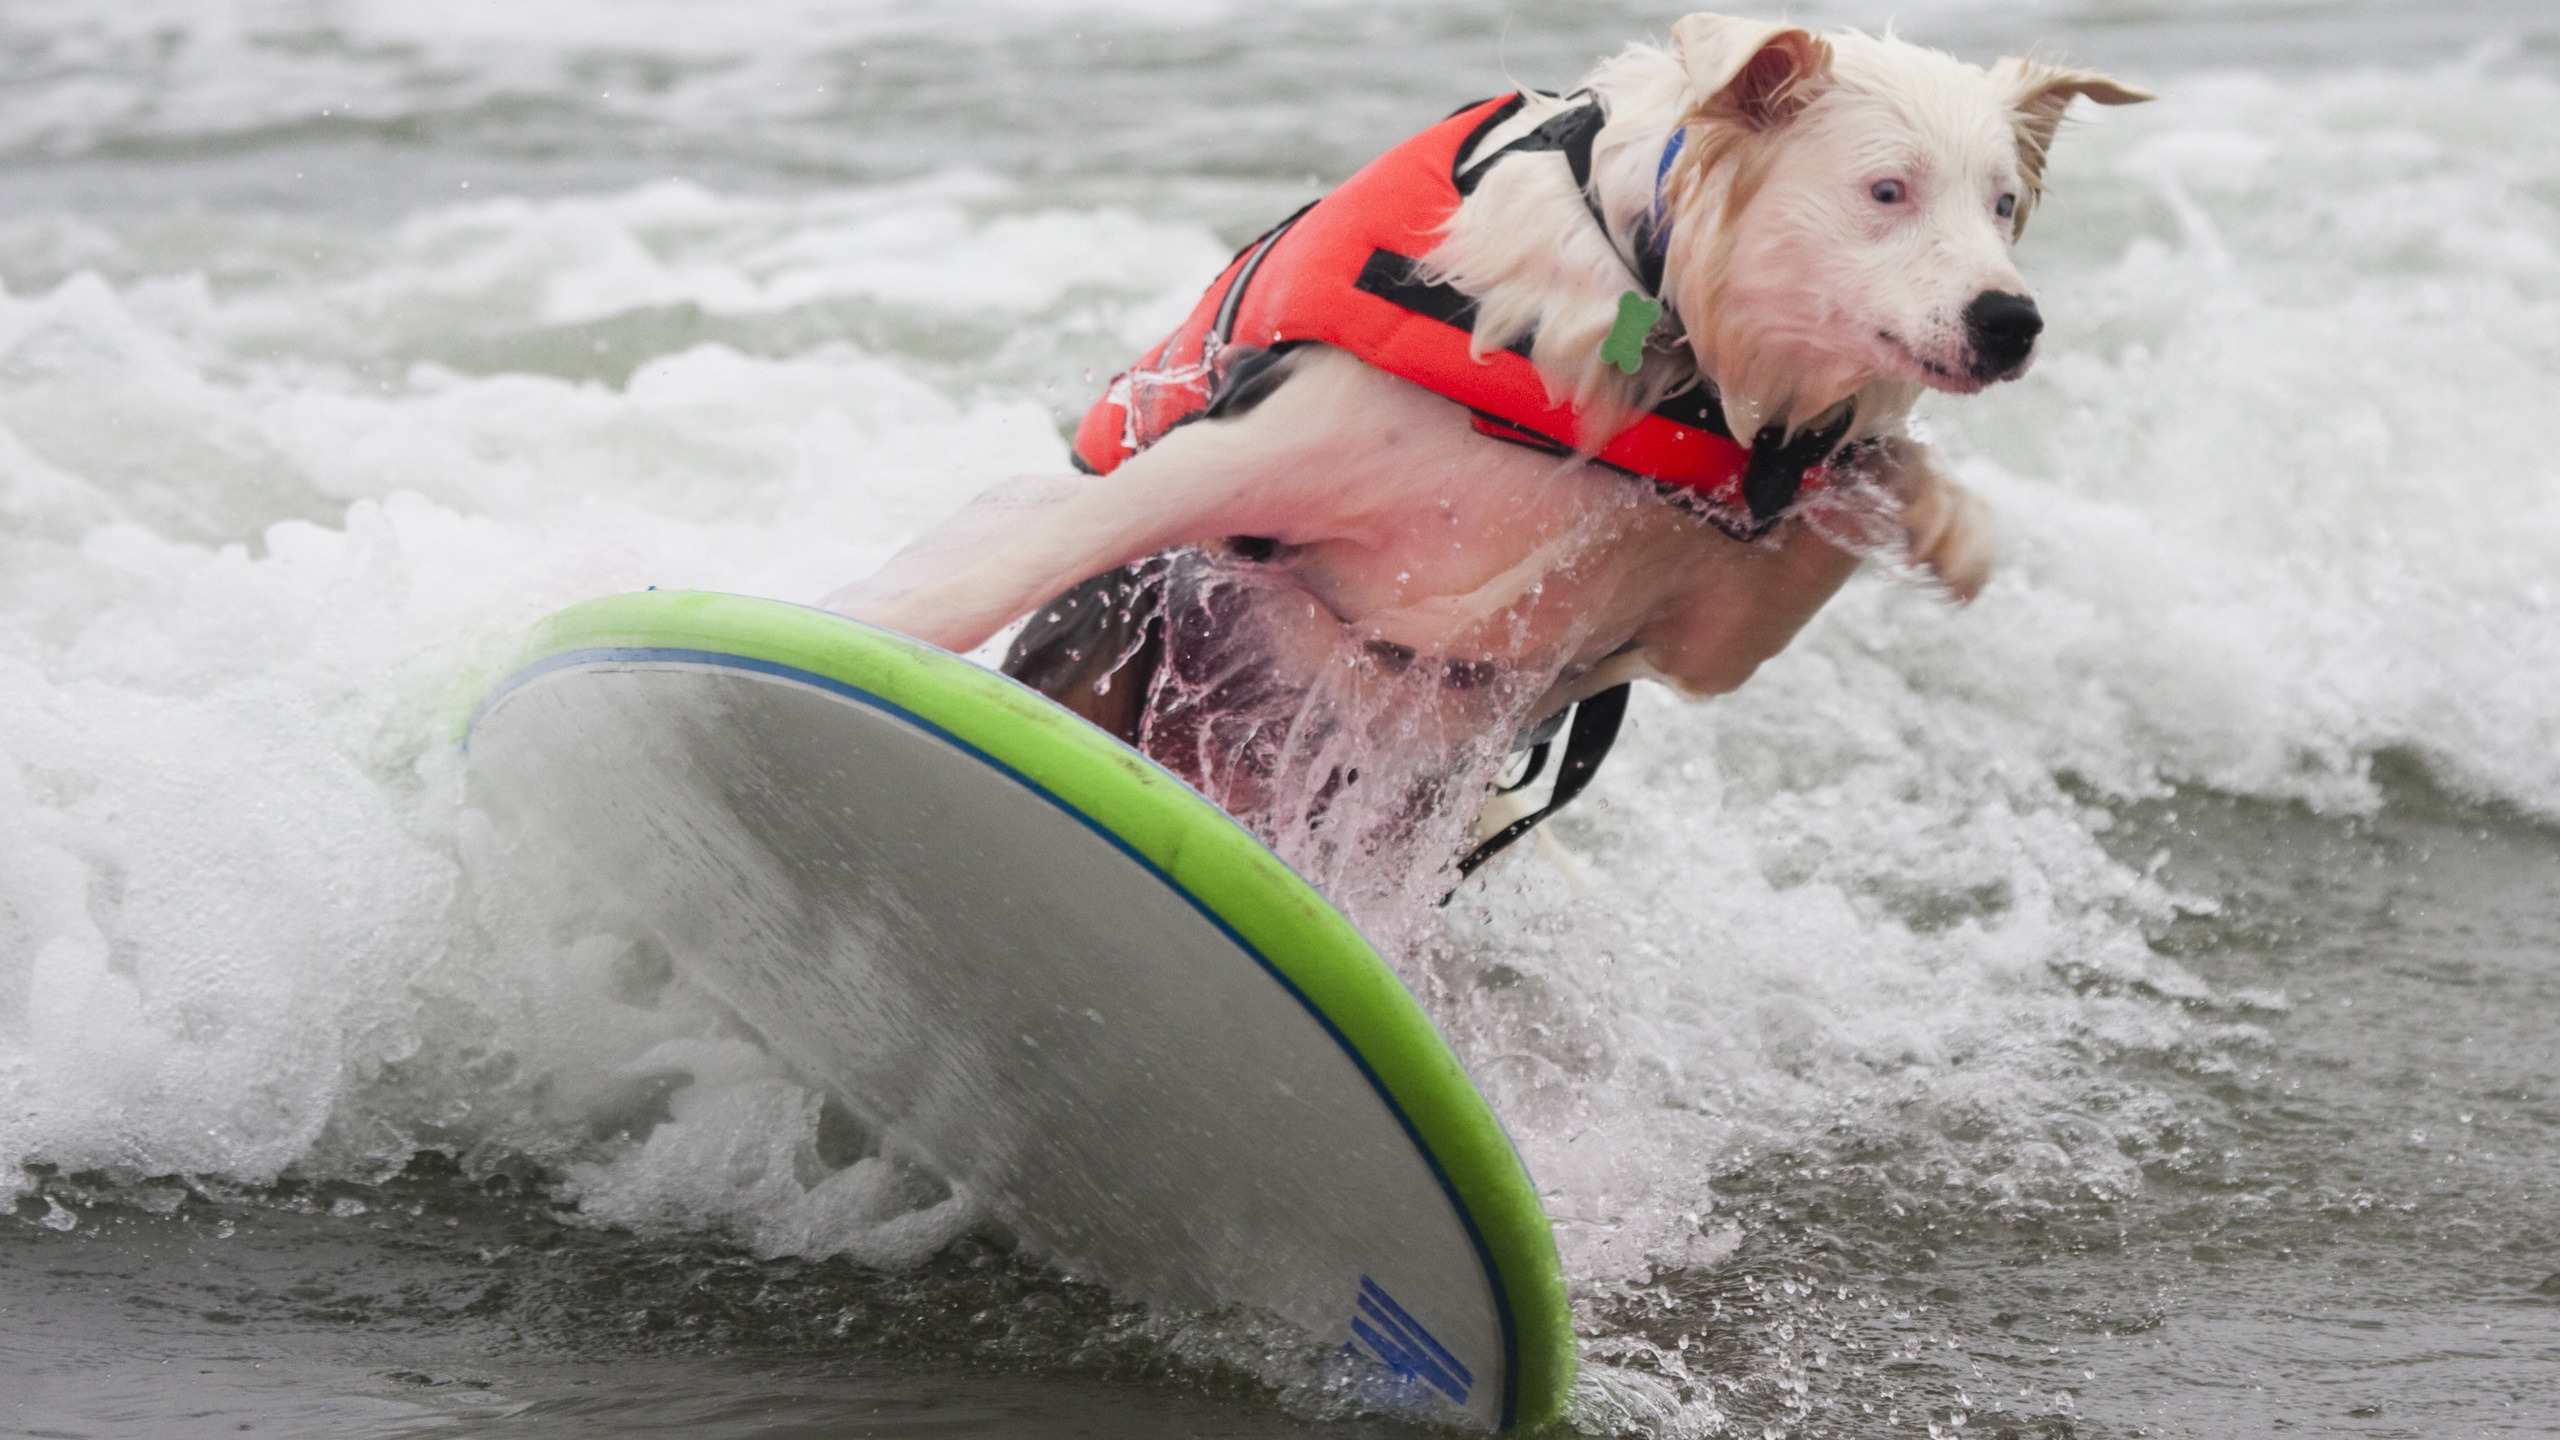 Dog Surfing for 2560x1440 HDTV resolution